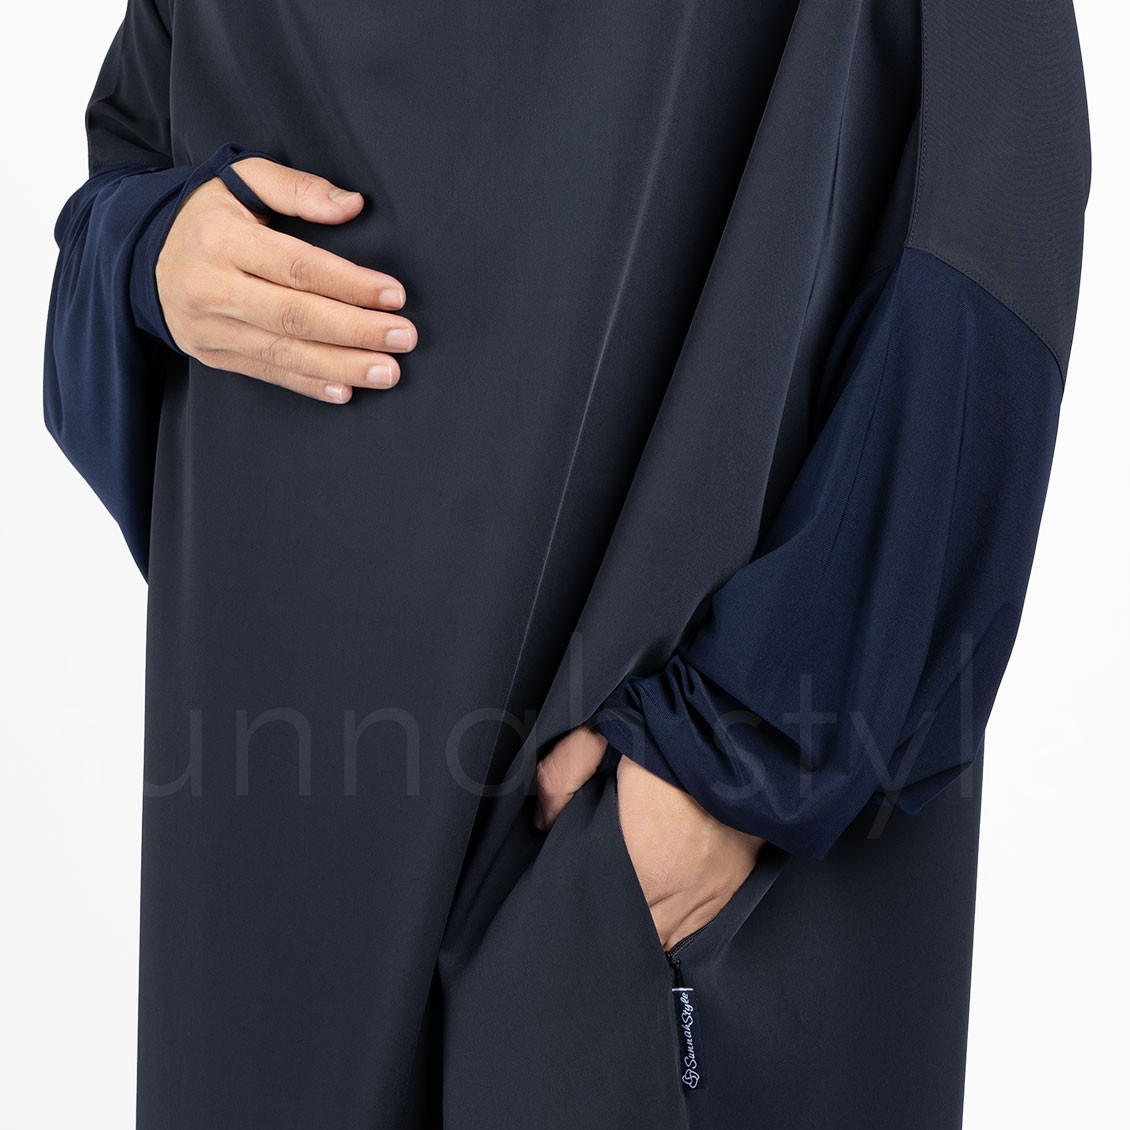 Sunnah Style Signature Full Length Jilbab (Navy Blue)